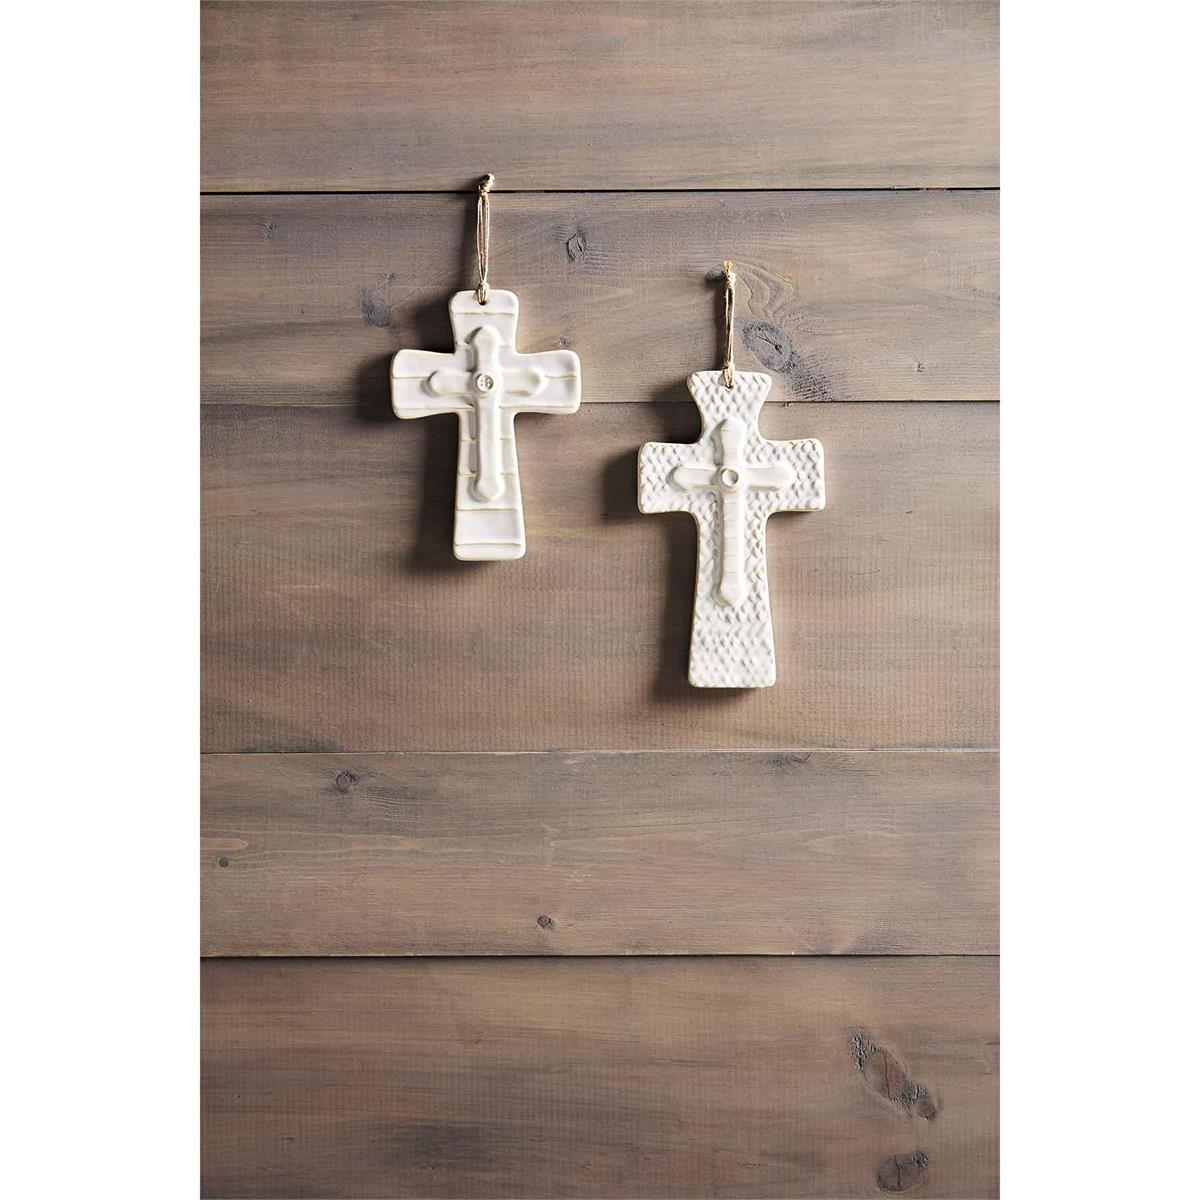 layered stoneware crosses hanging on a dark wood slat wall